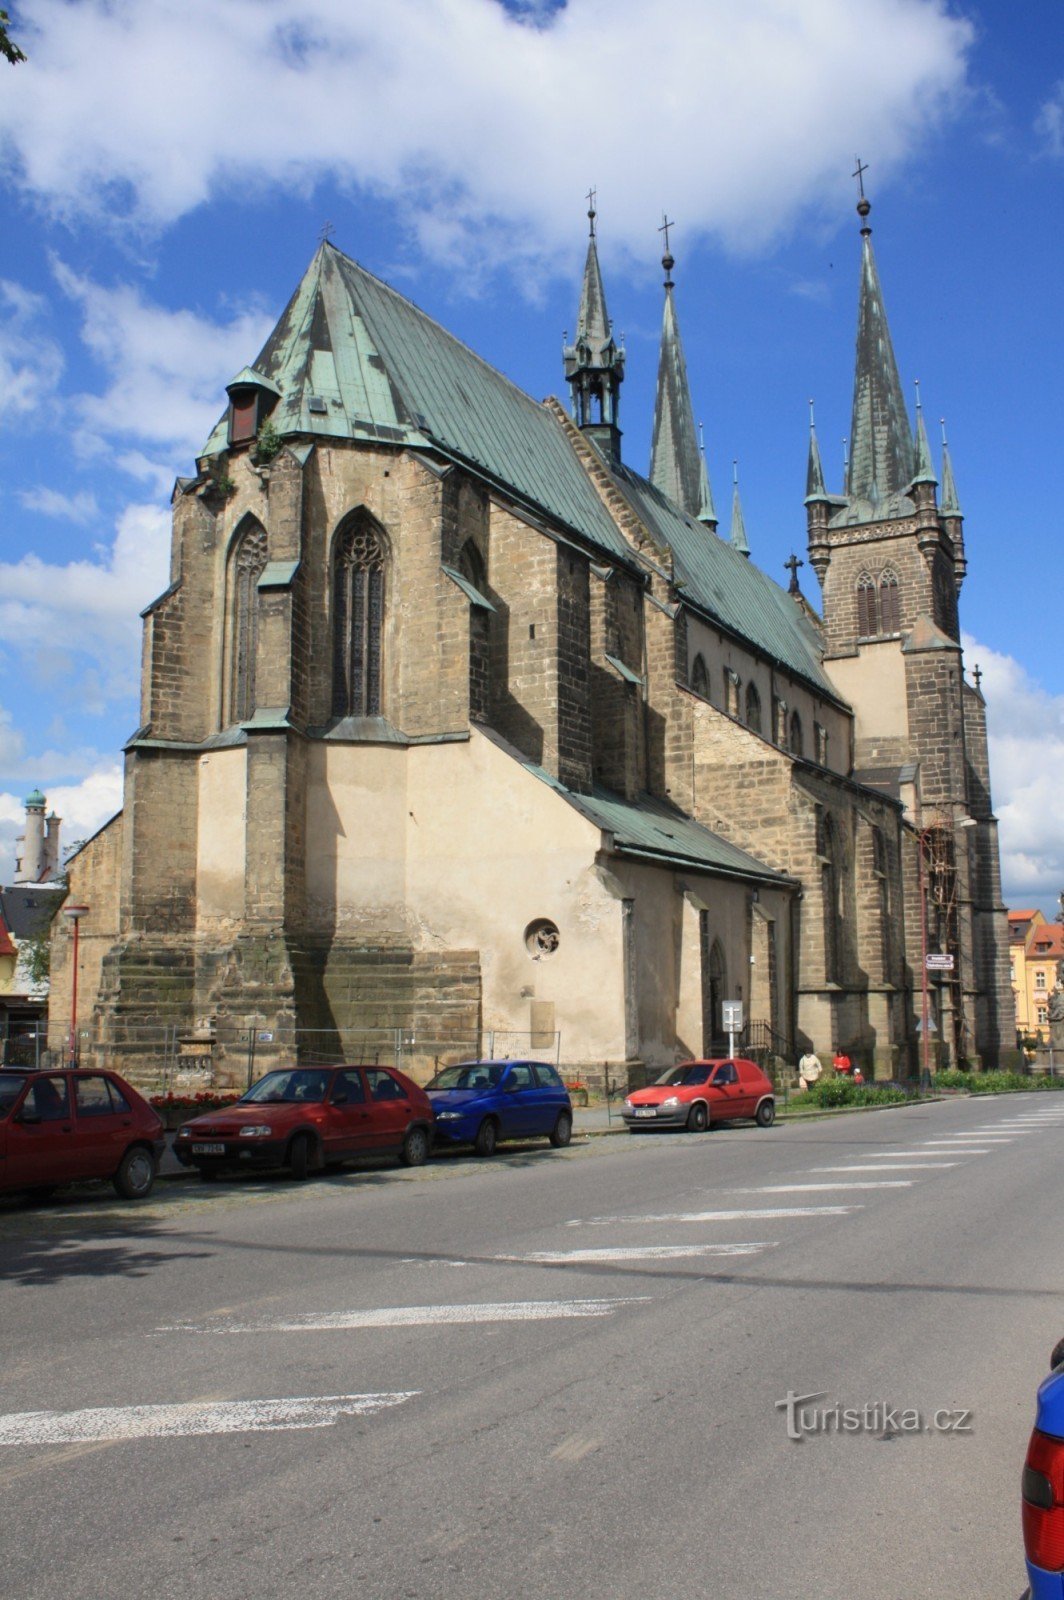 Pogled na crkvu s istočne strane